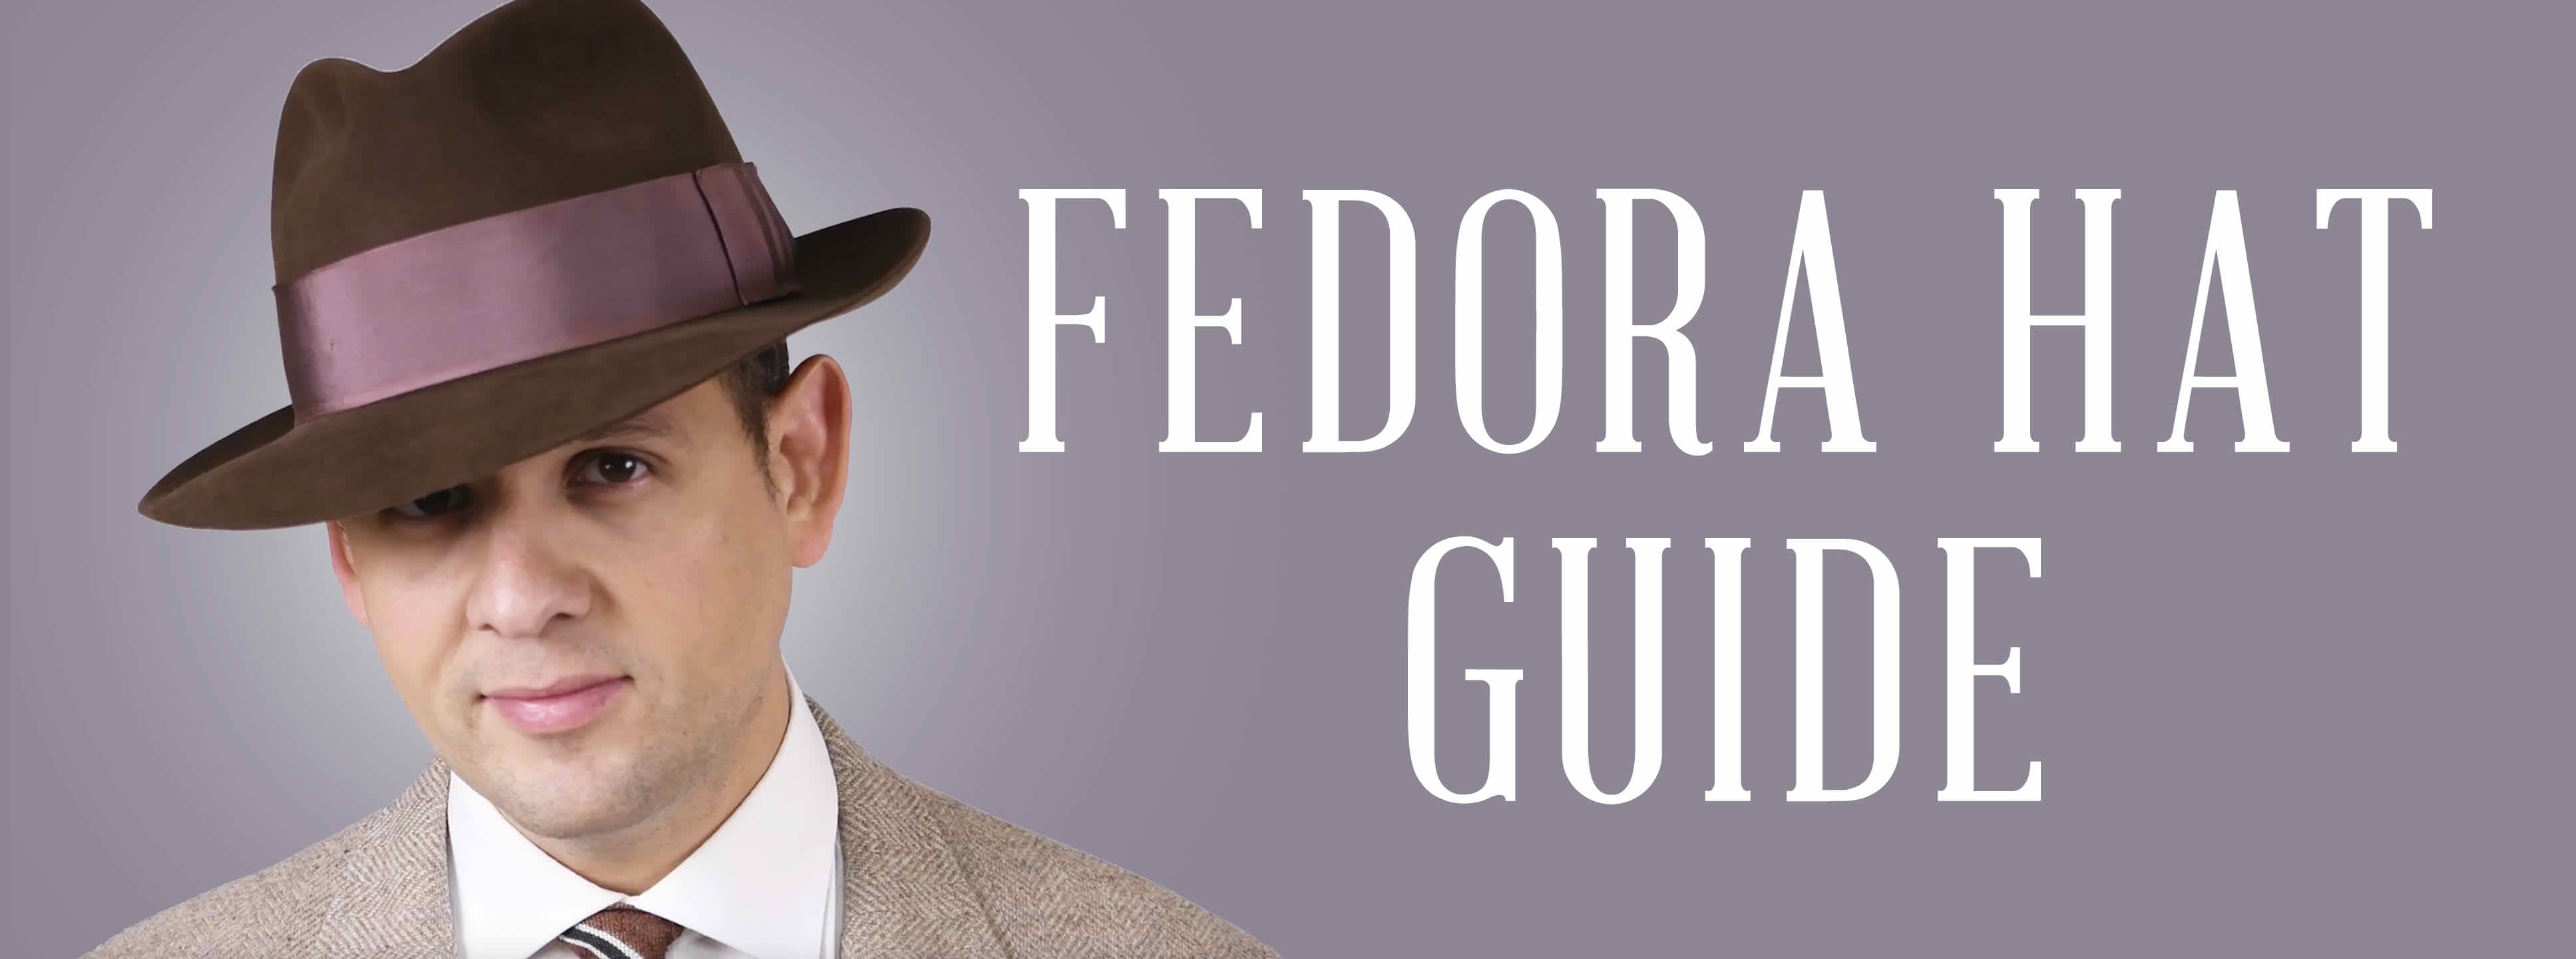 Cotton Camel Fedora Hat for Woman Elegant Men Gentleman Godfather Wide Trilby Royal Top Cap Vintage Jazz Hats